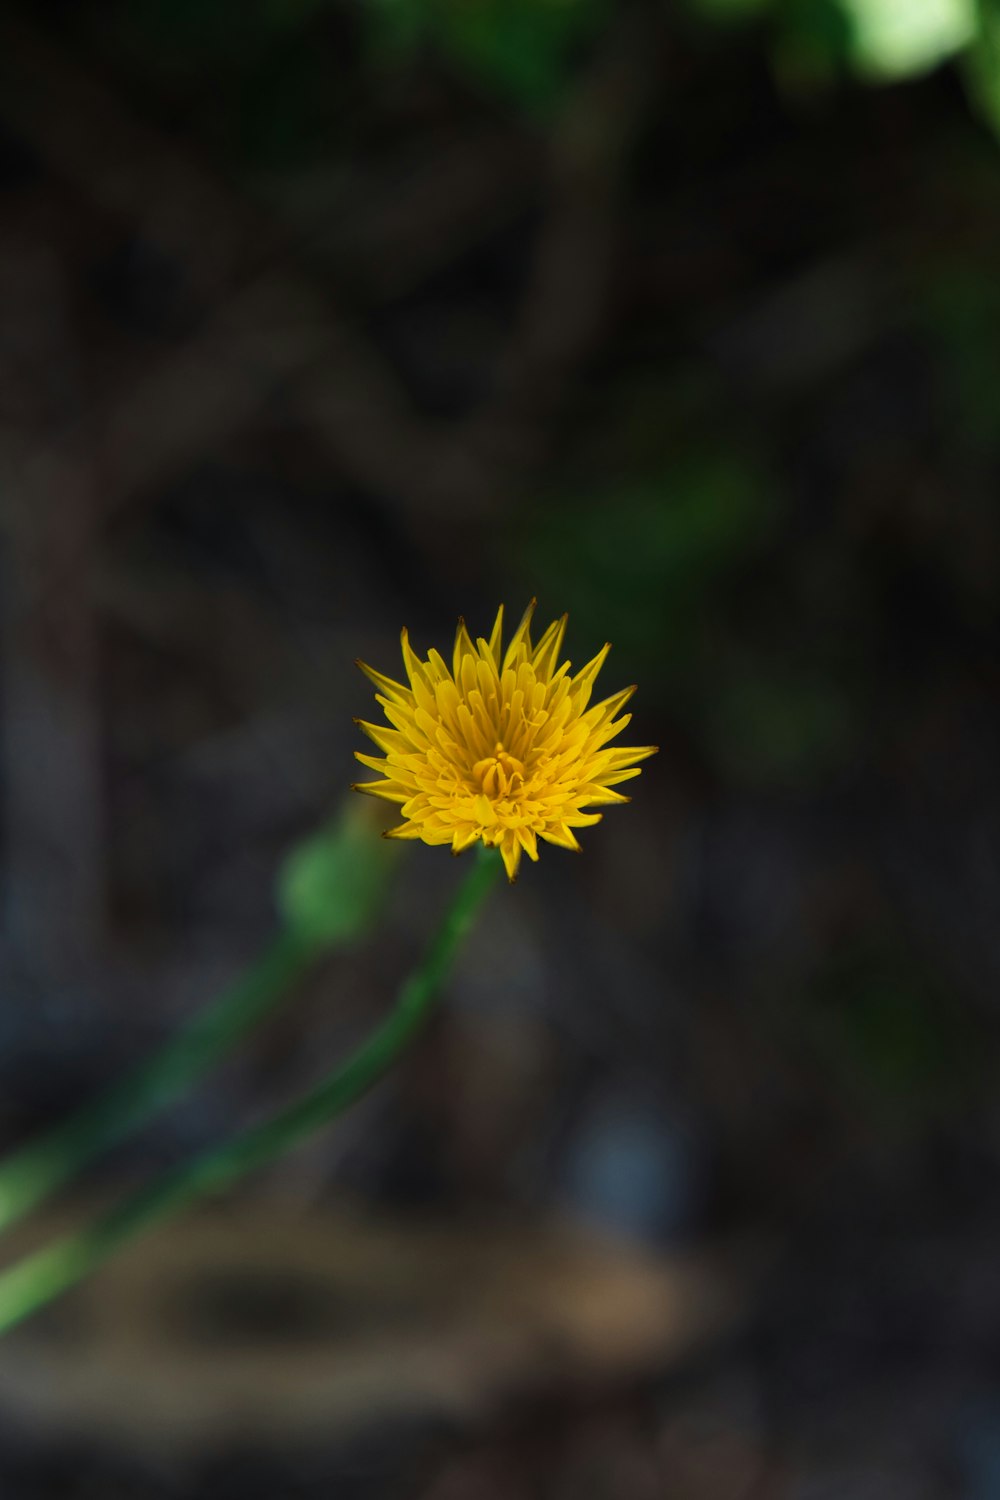 yellow dandelion in bloom during daytime